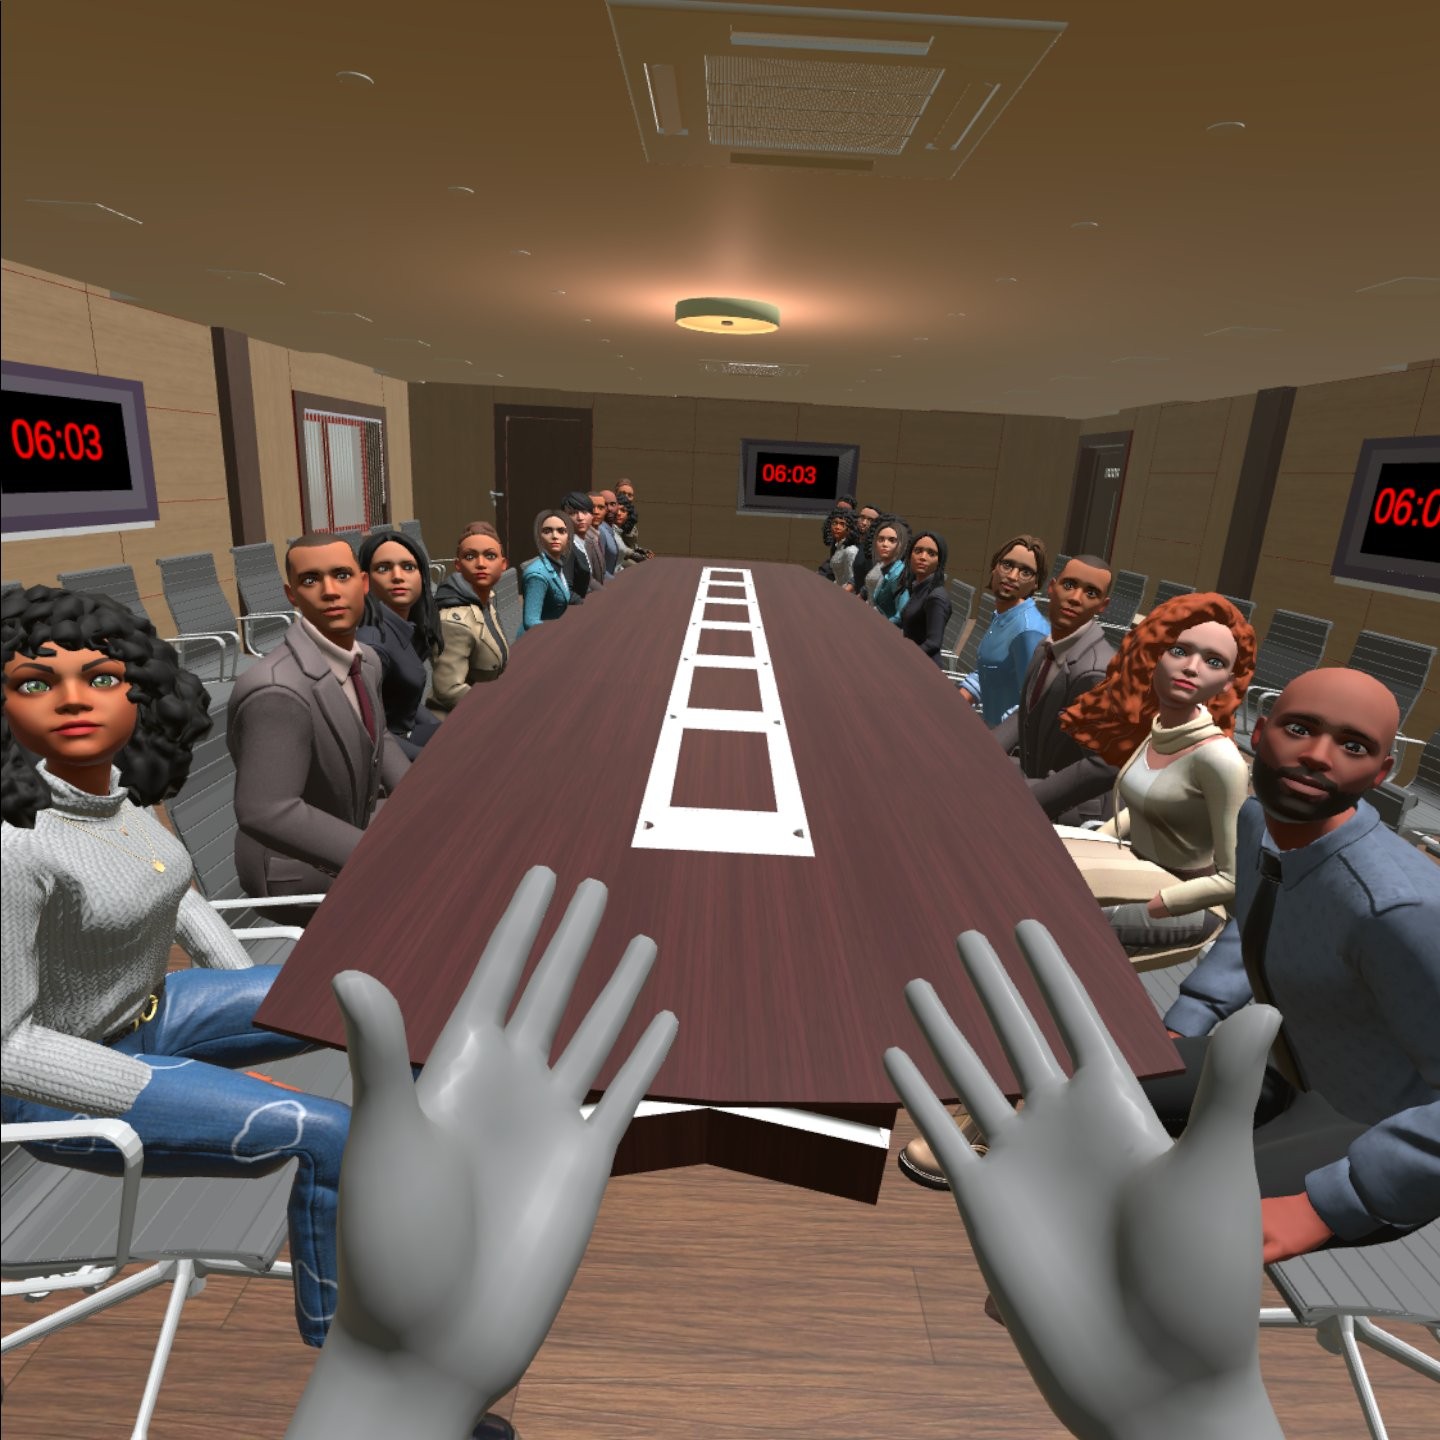 AWRA Virtual Reality exposure therapy for glossophobia